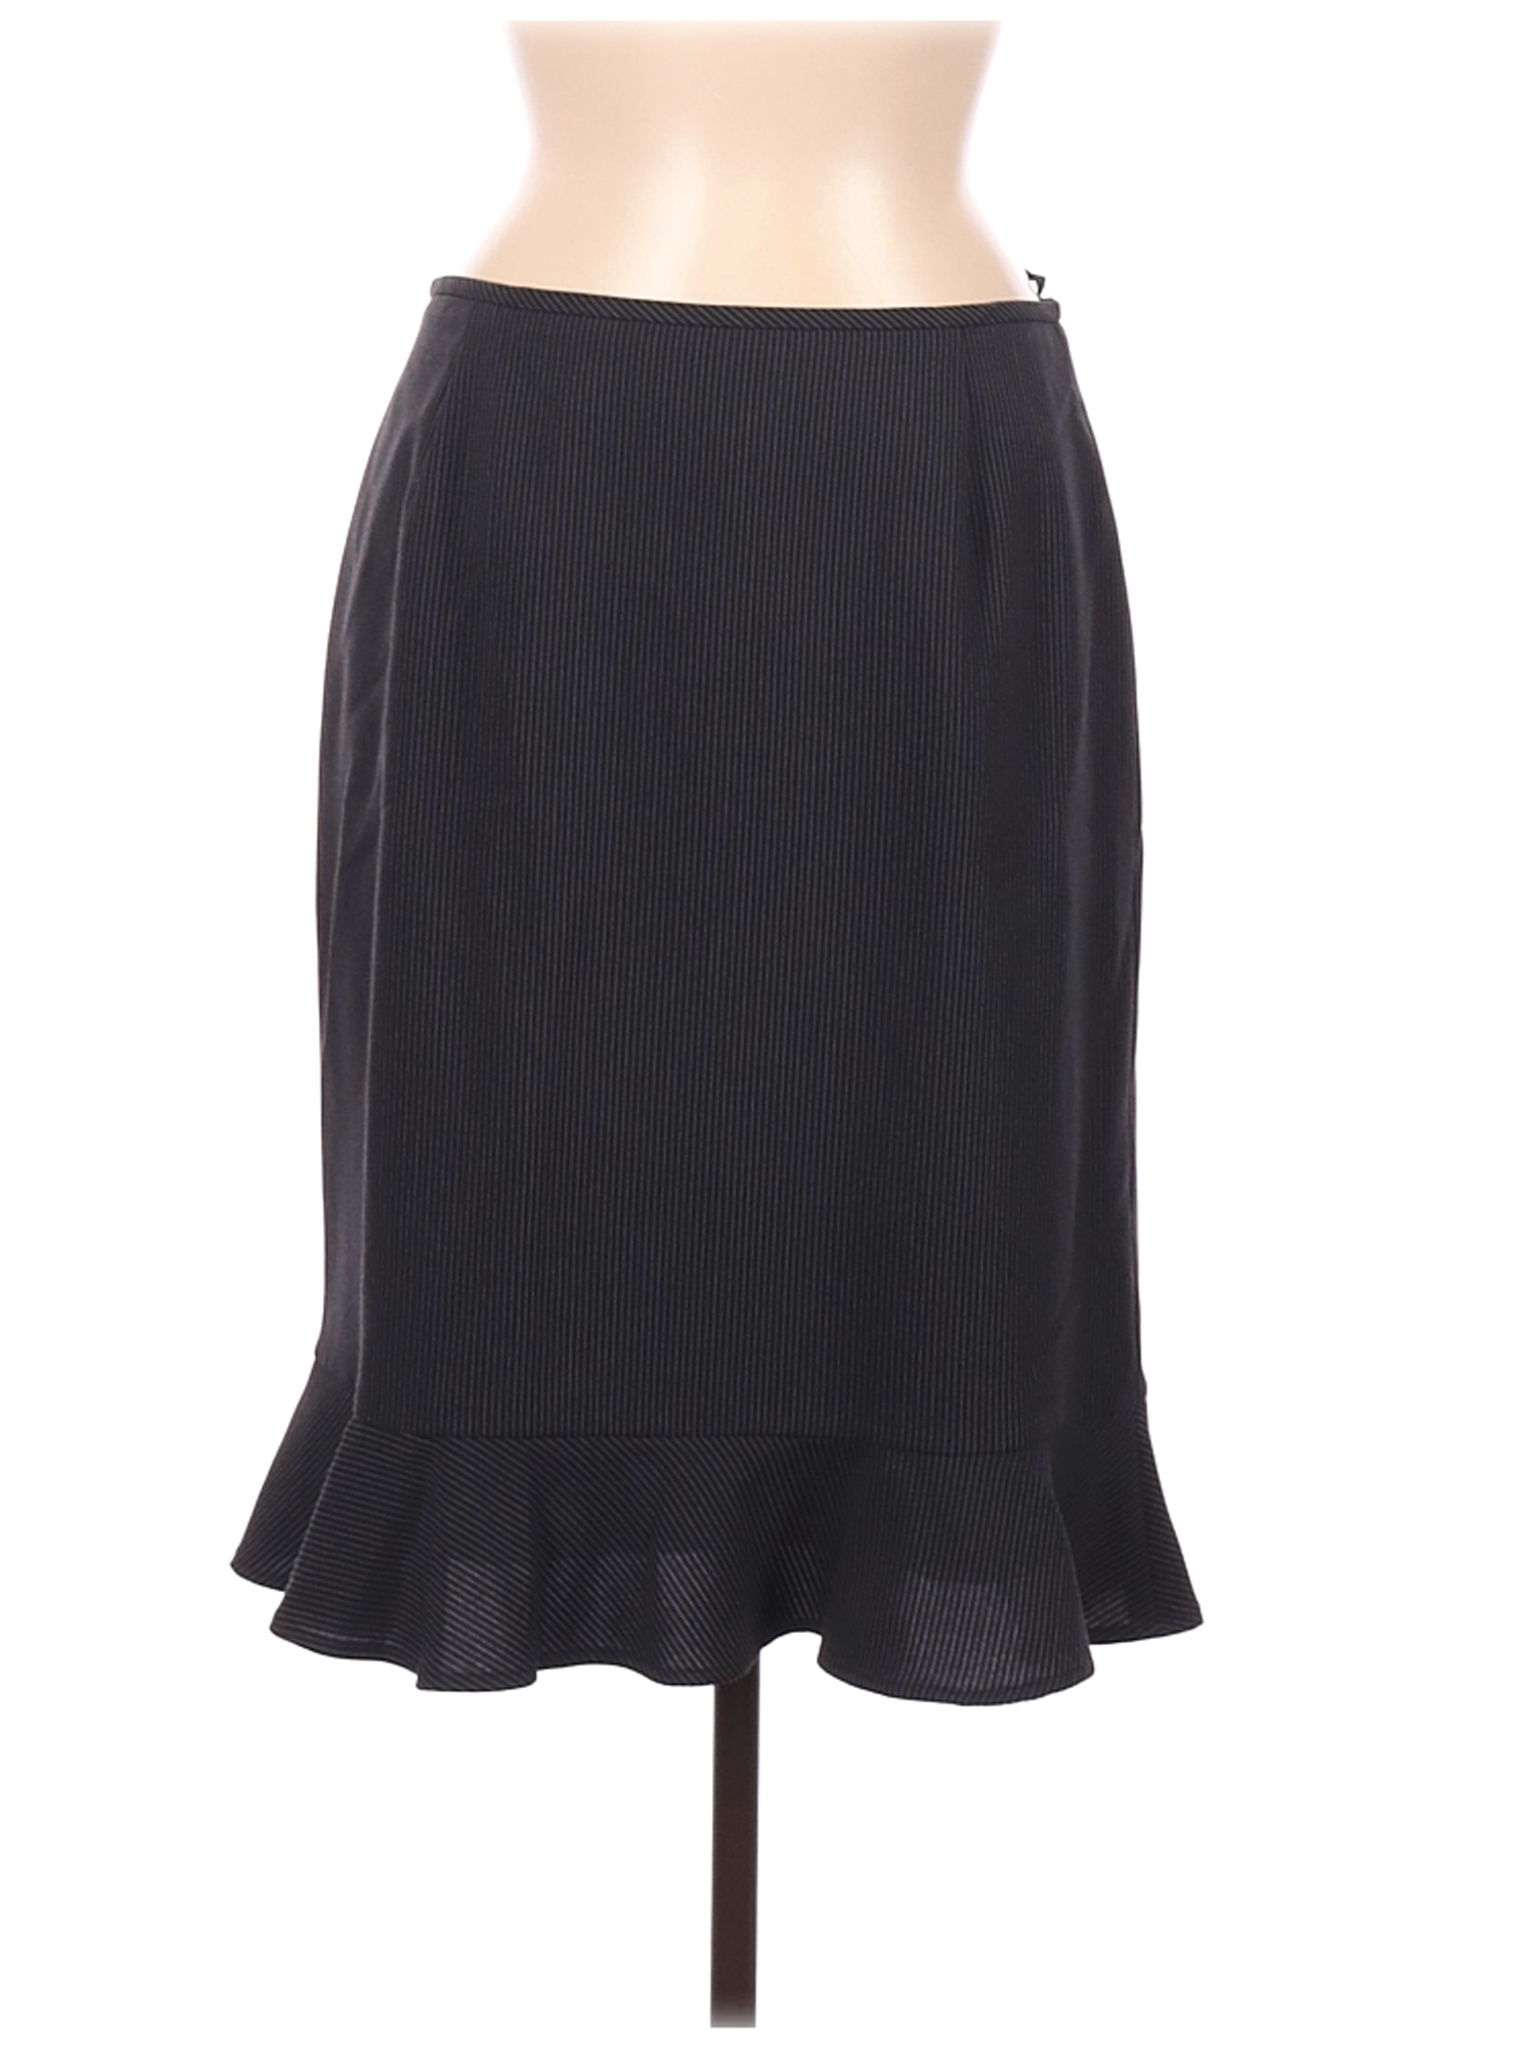 NWT T Tahari Women Black Casual Skirt 8 | eBay